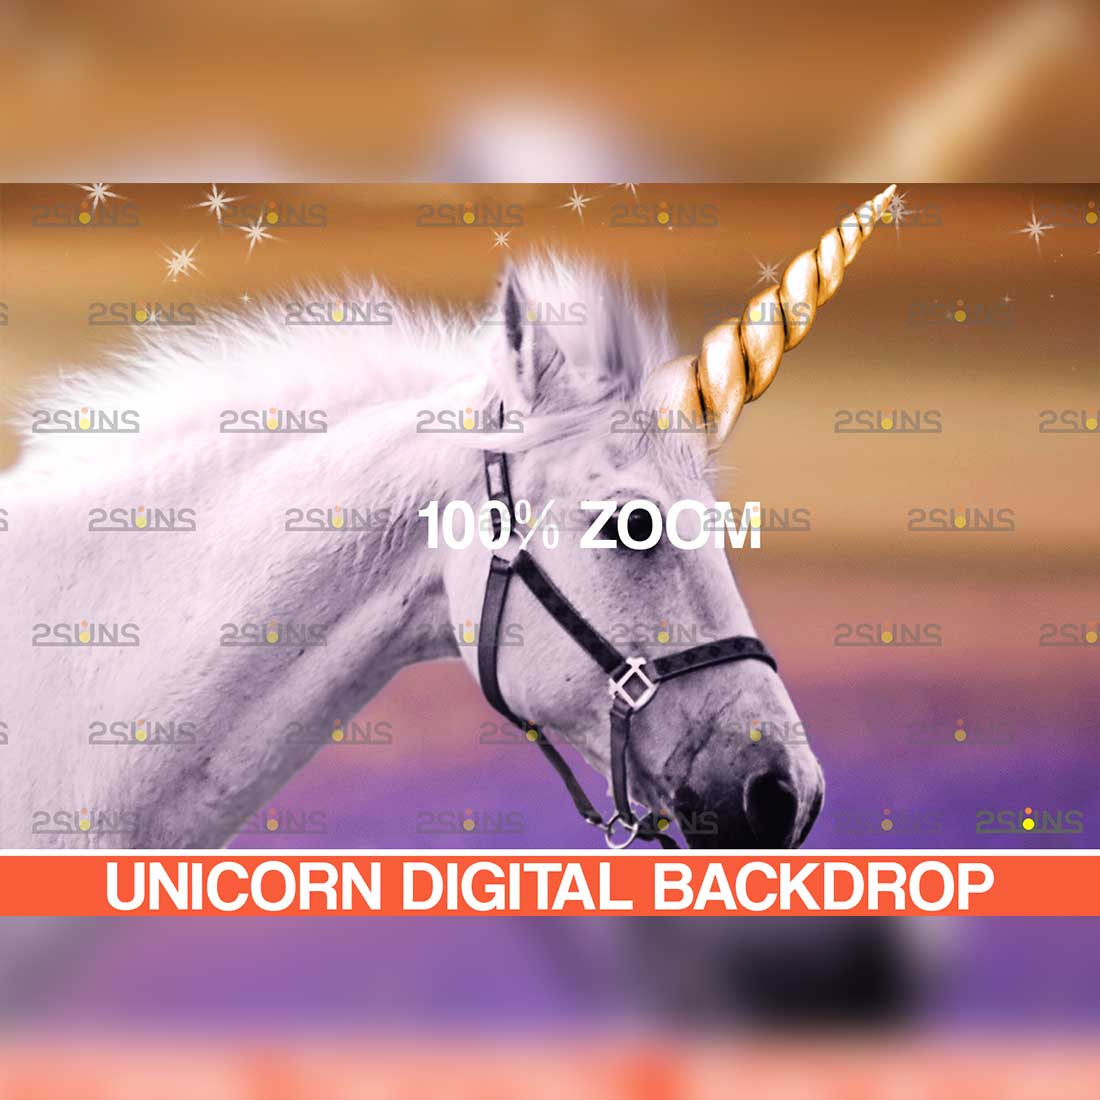 Unicorn Floral Digital Backdrop Background Preview Image.